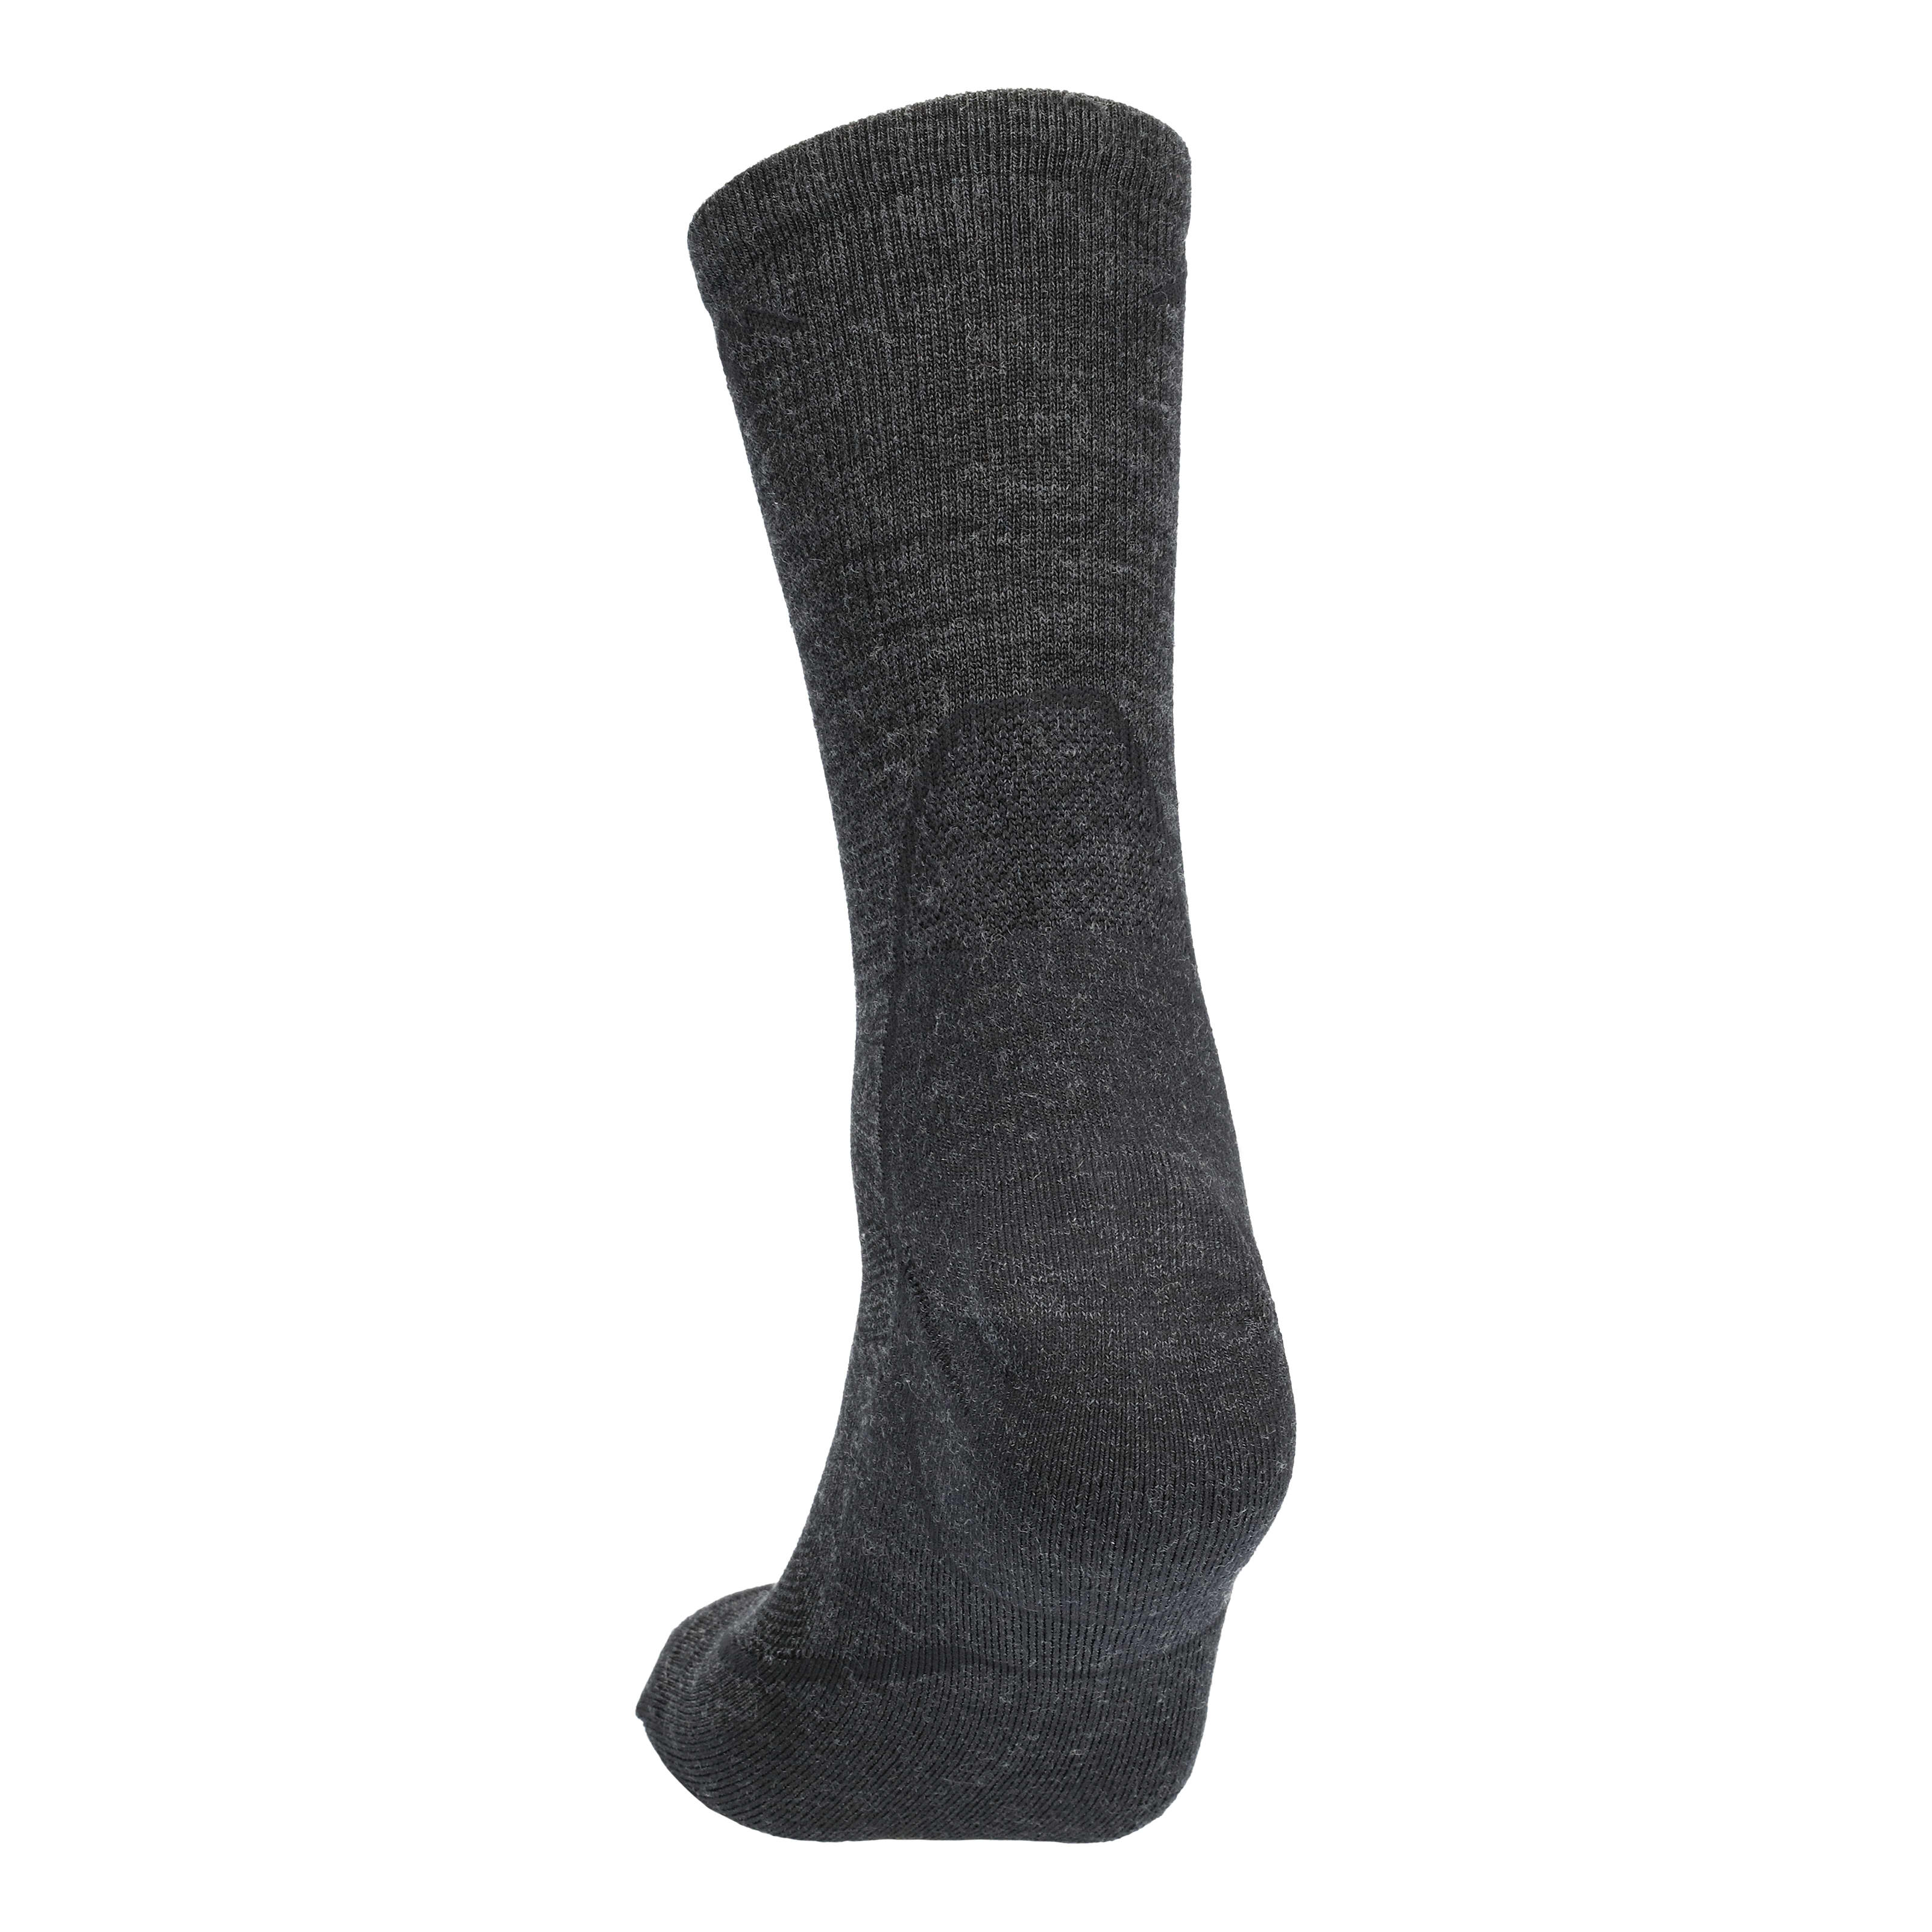 Darn Tough® Men's Light Hiker Merino Wool Crew Socks - Black - Heel View